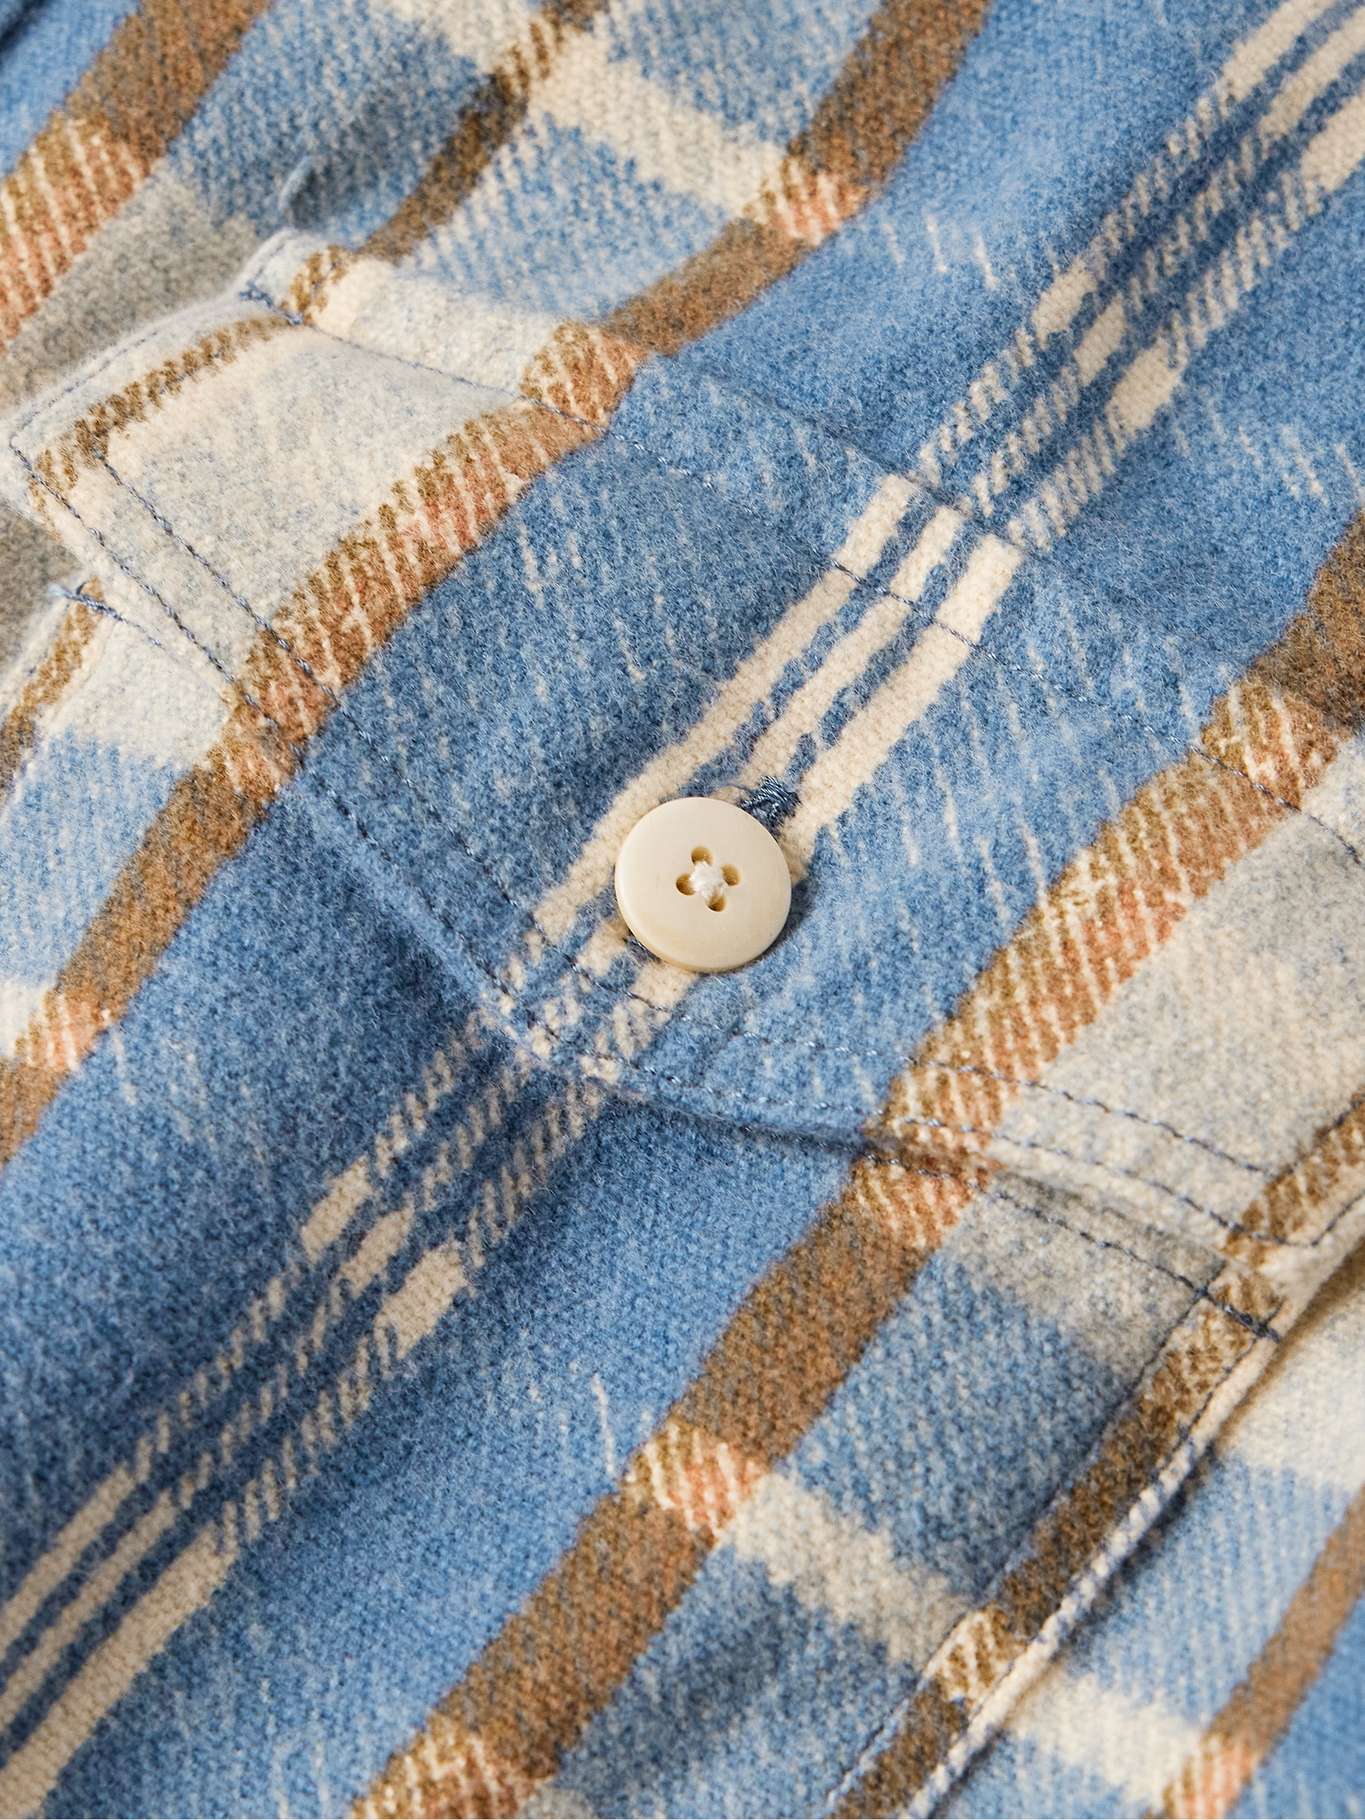 VISVIM Pioneer Checked Brushed Cotton-Flannel Shirt for Men | MR PORTER